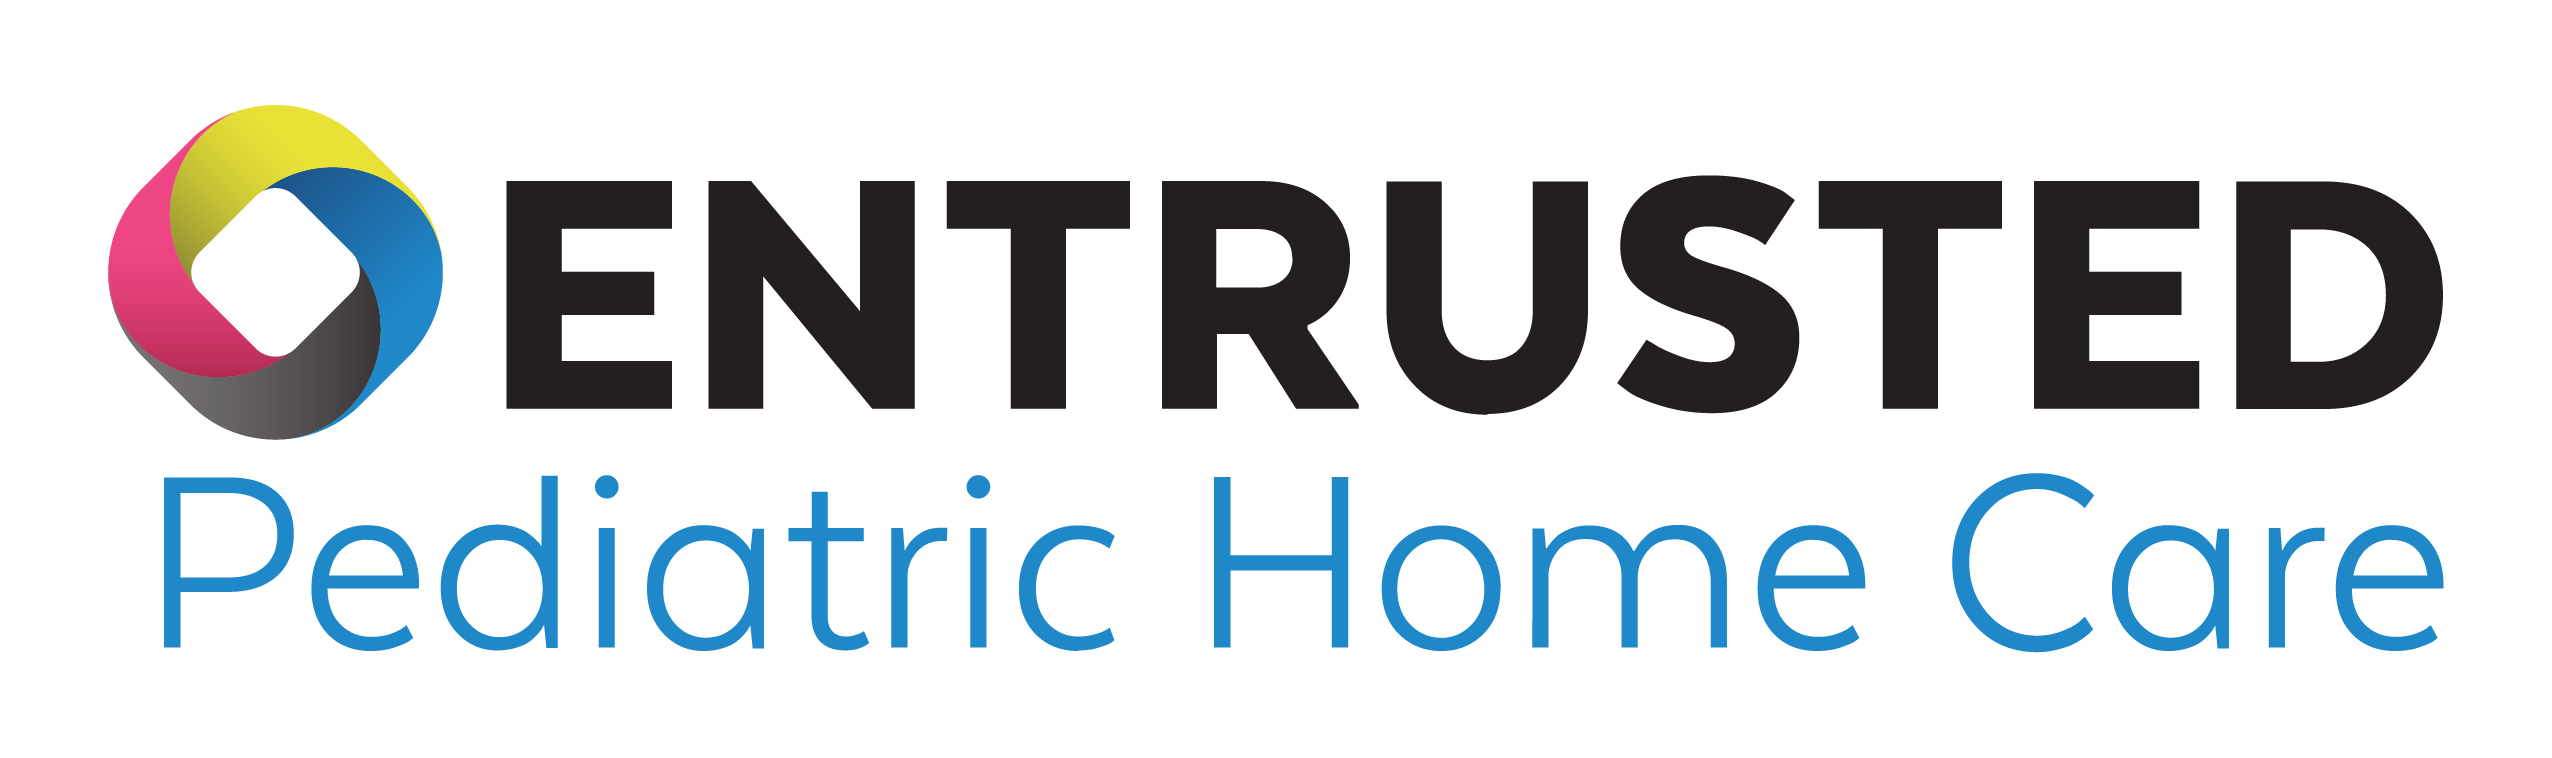 Entrusted Pediatric Home Care Logo